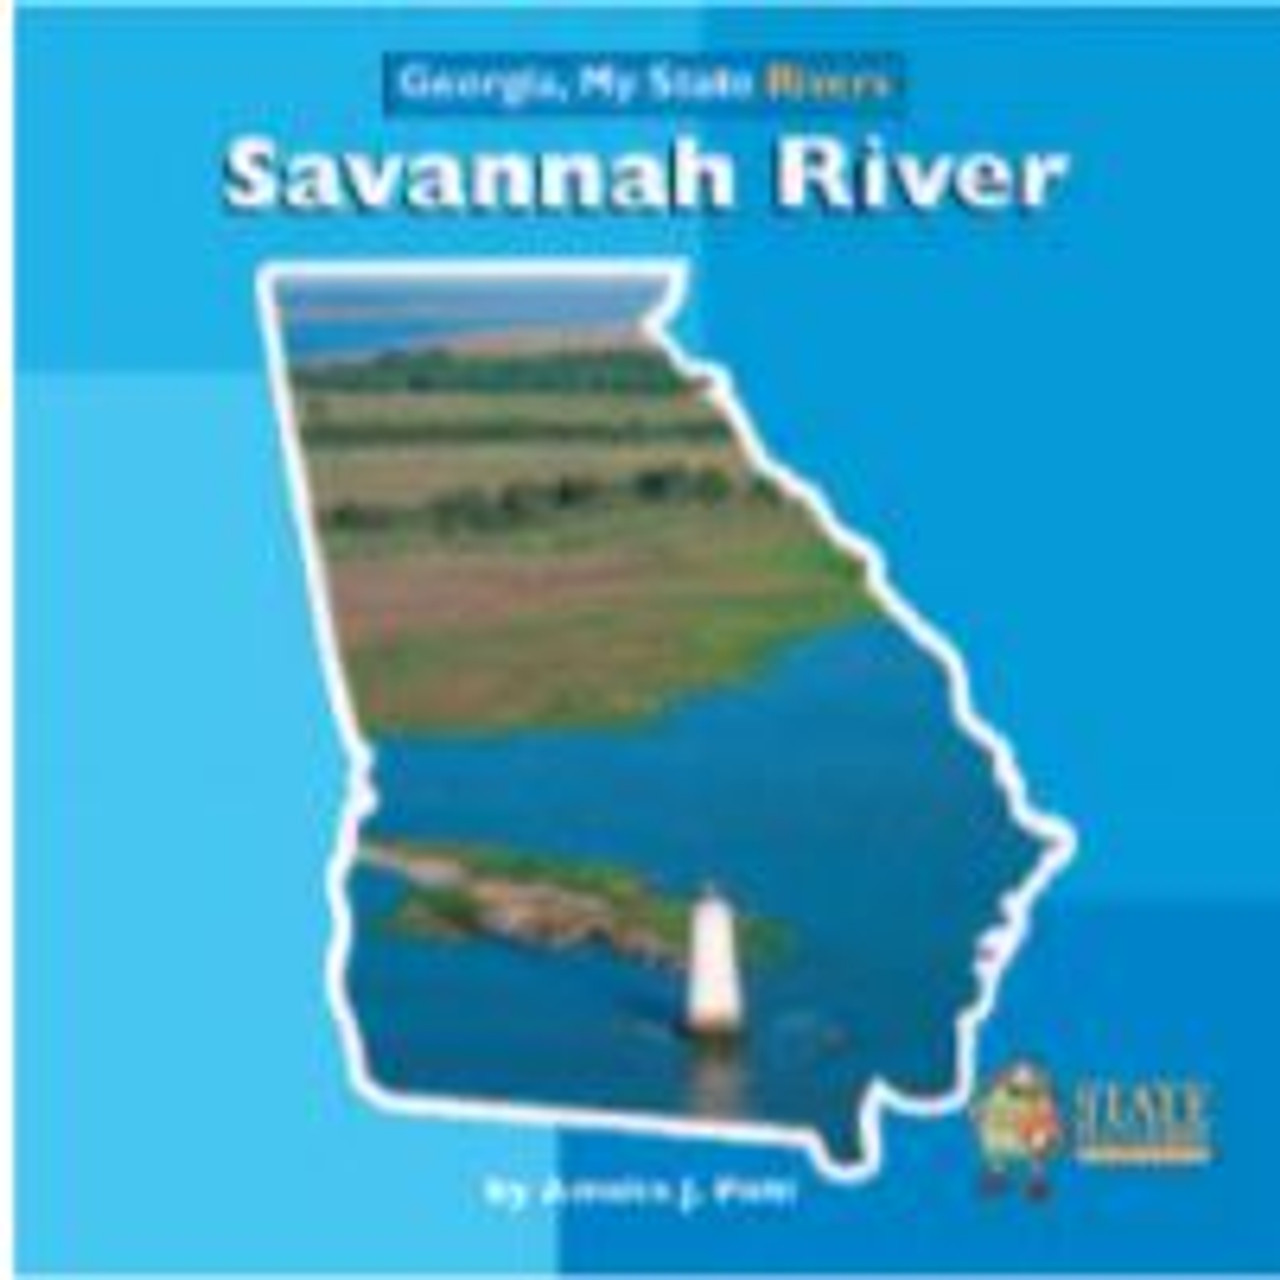 Savannah River by Amelia Pohl